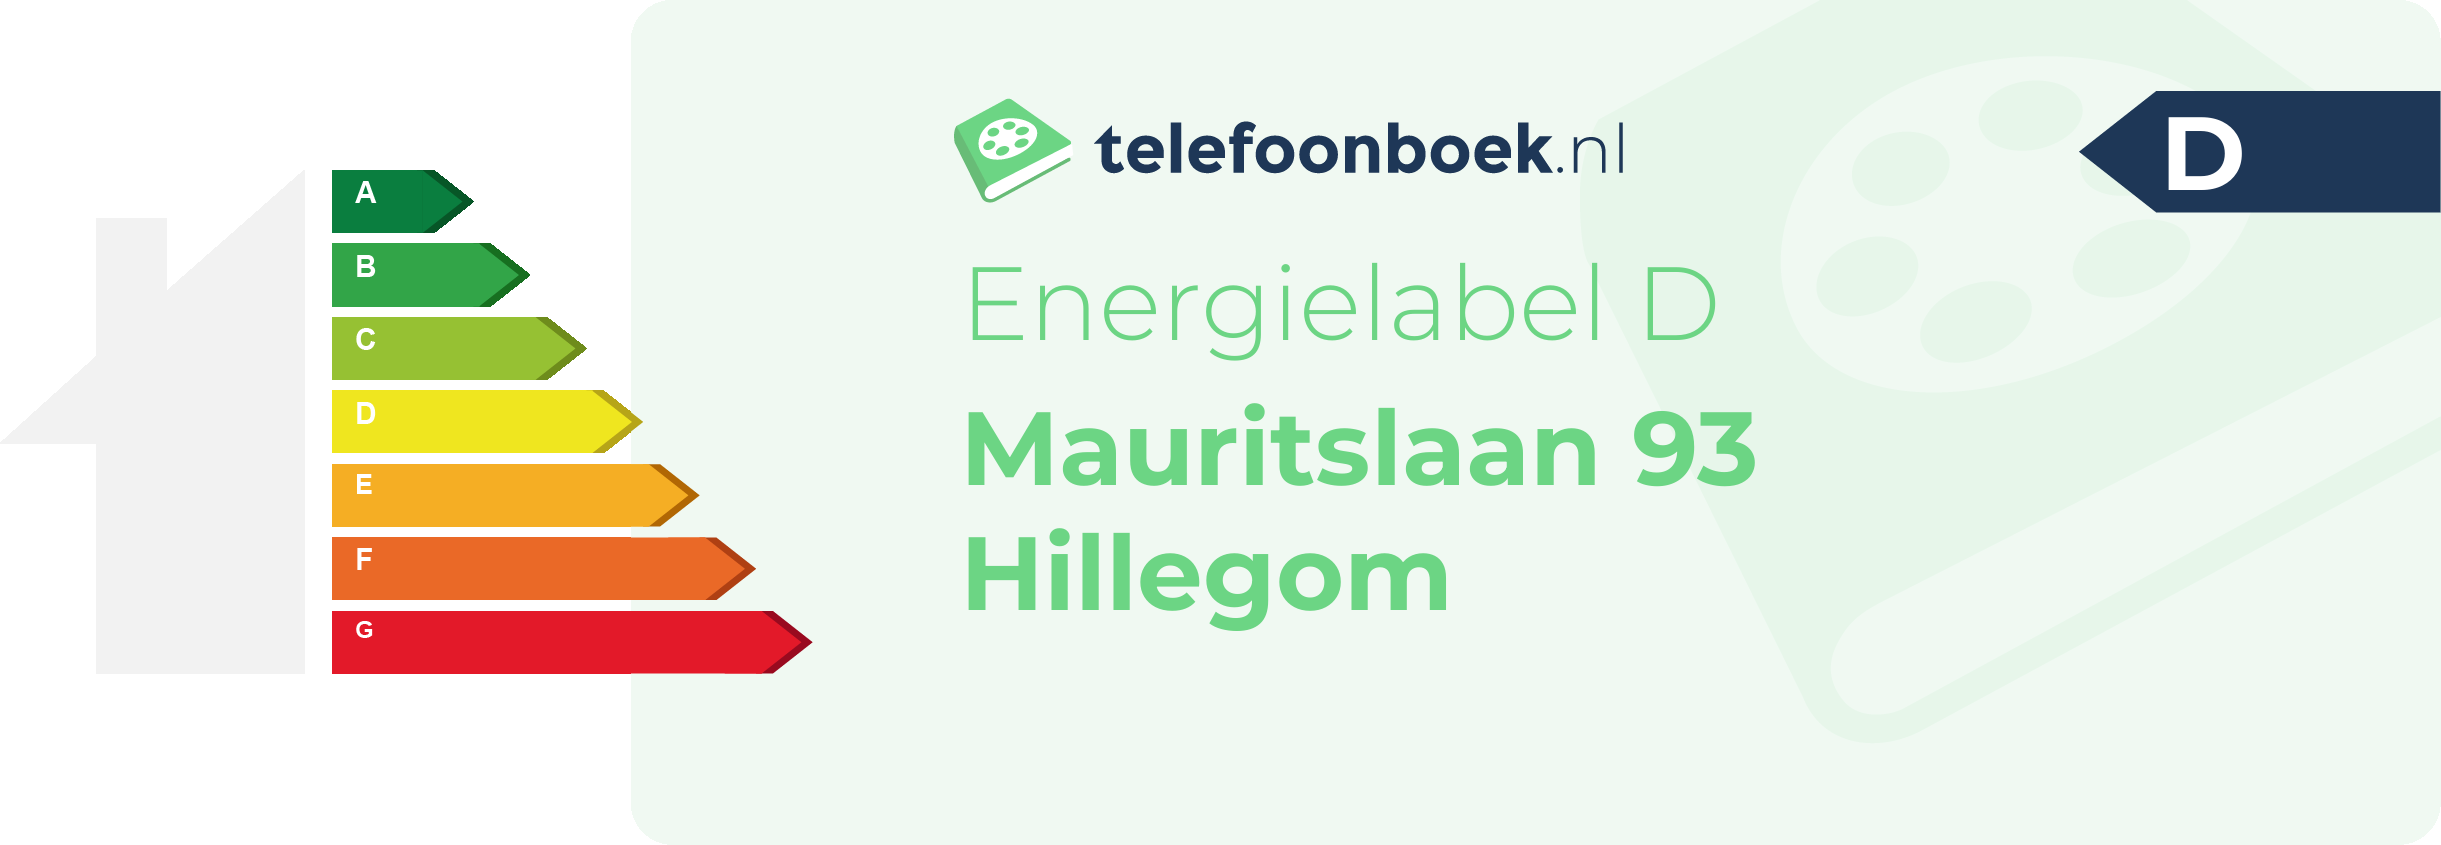 Energielabel Mauritslaan 93 Hillegom